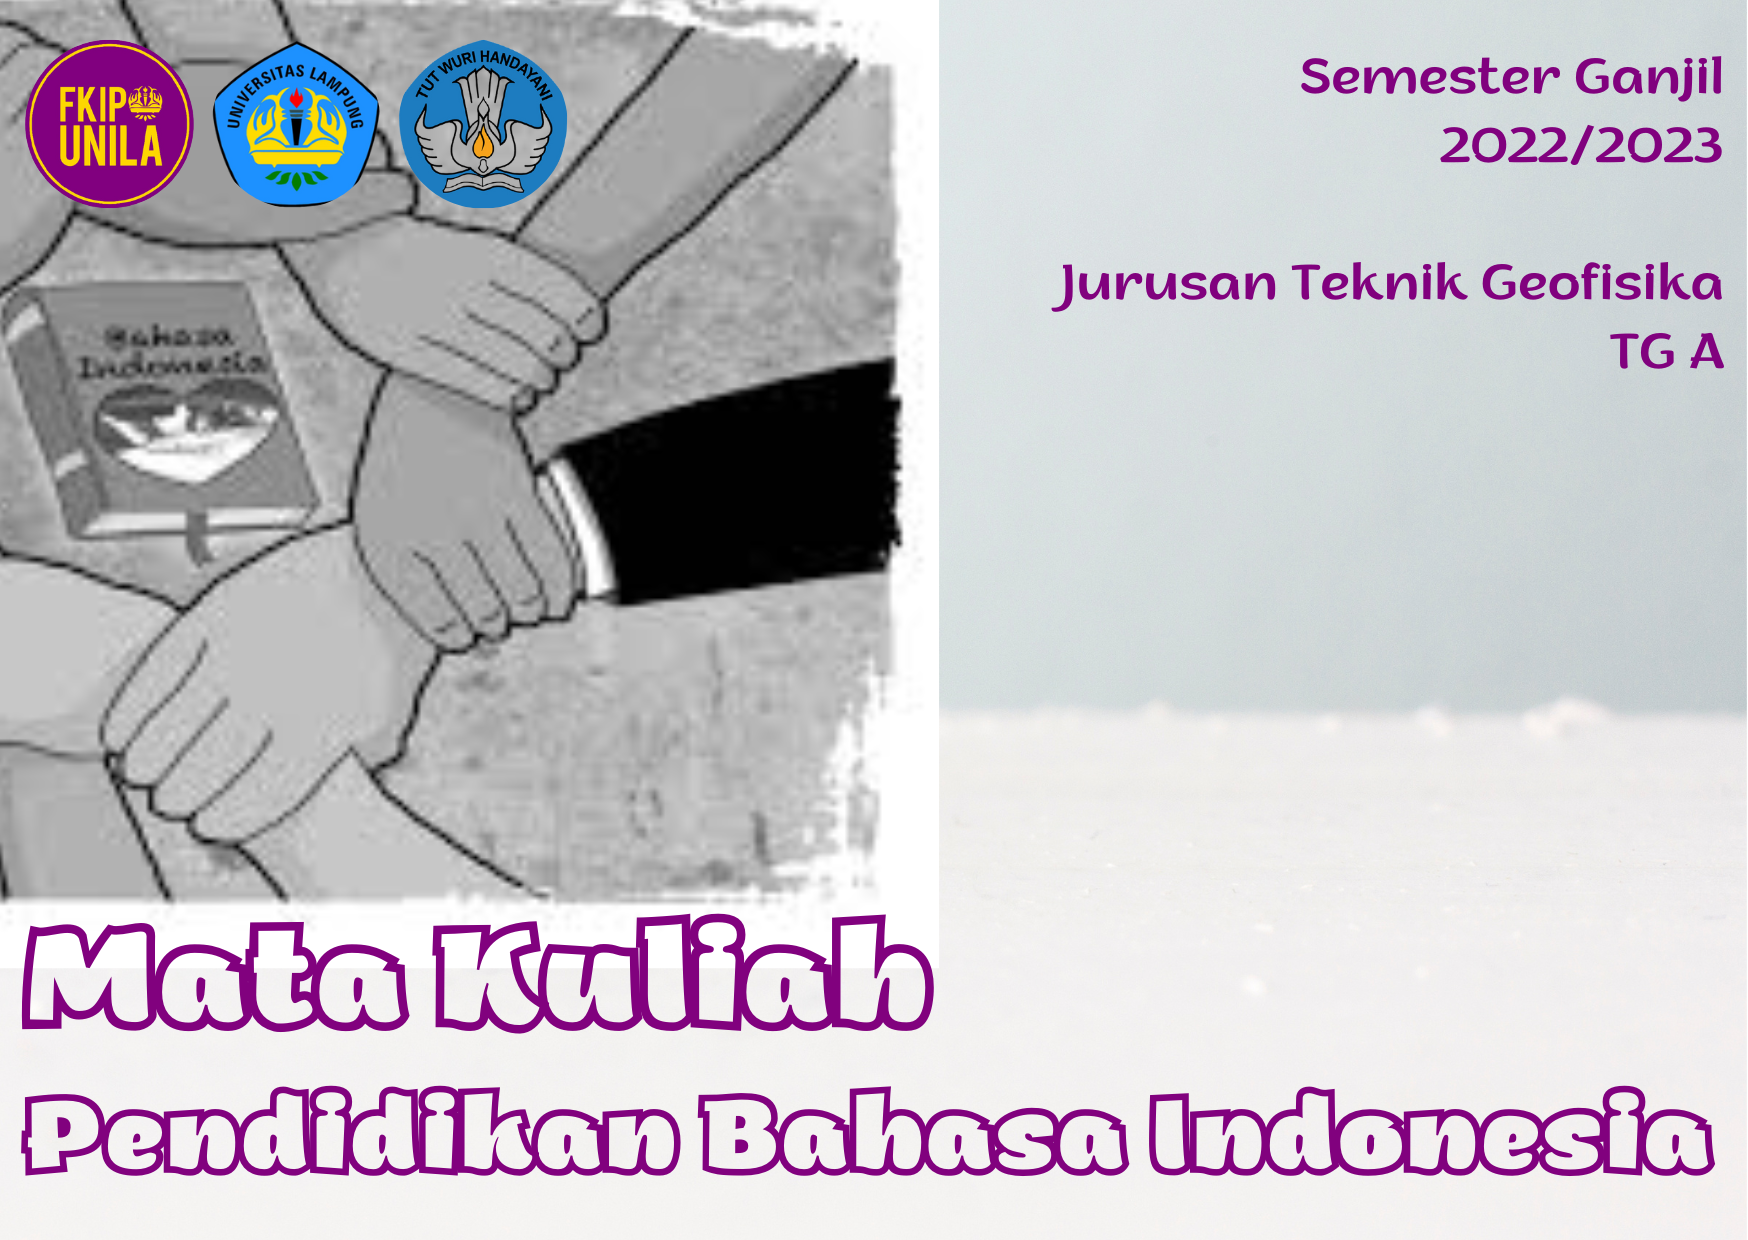 TG A 22 Pendidikan Bahasa Indonesia